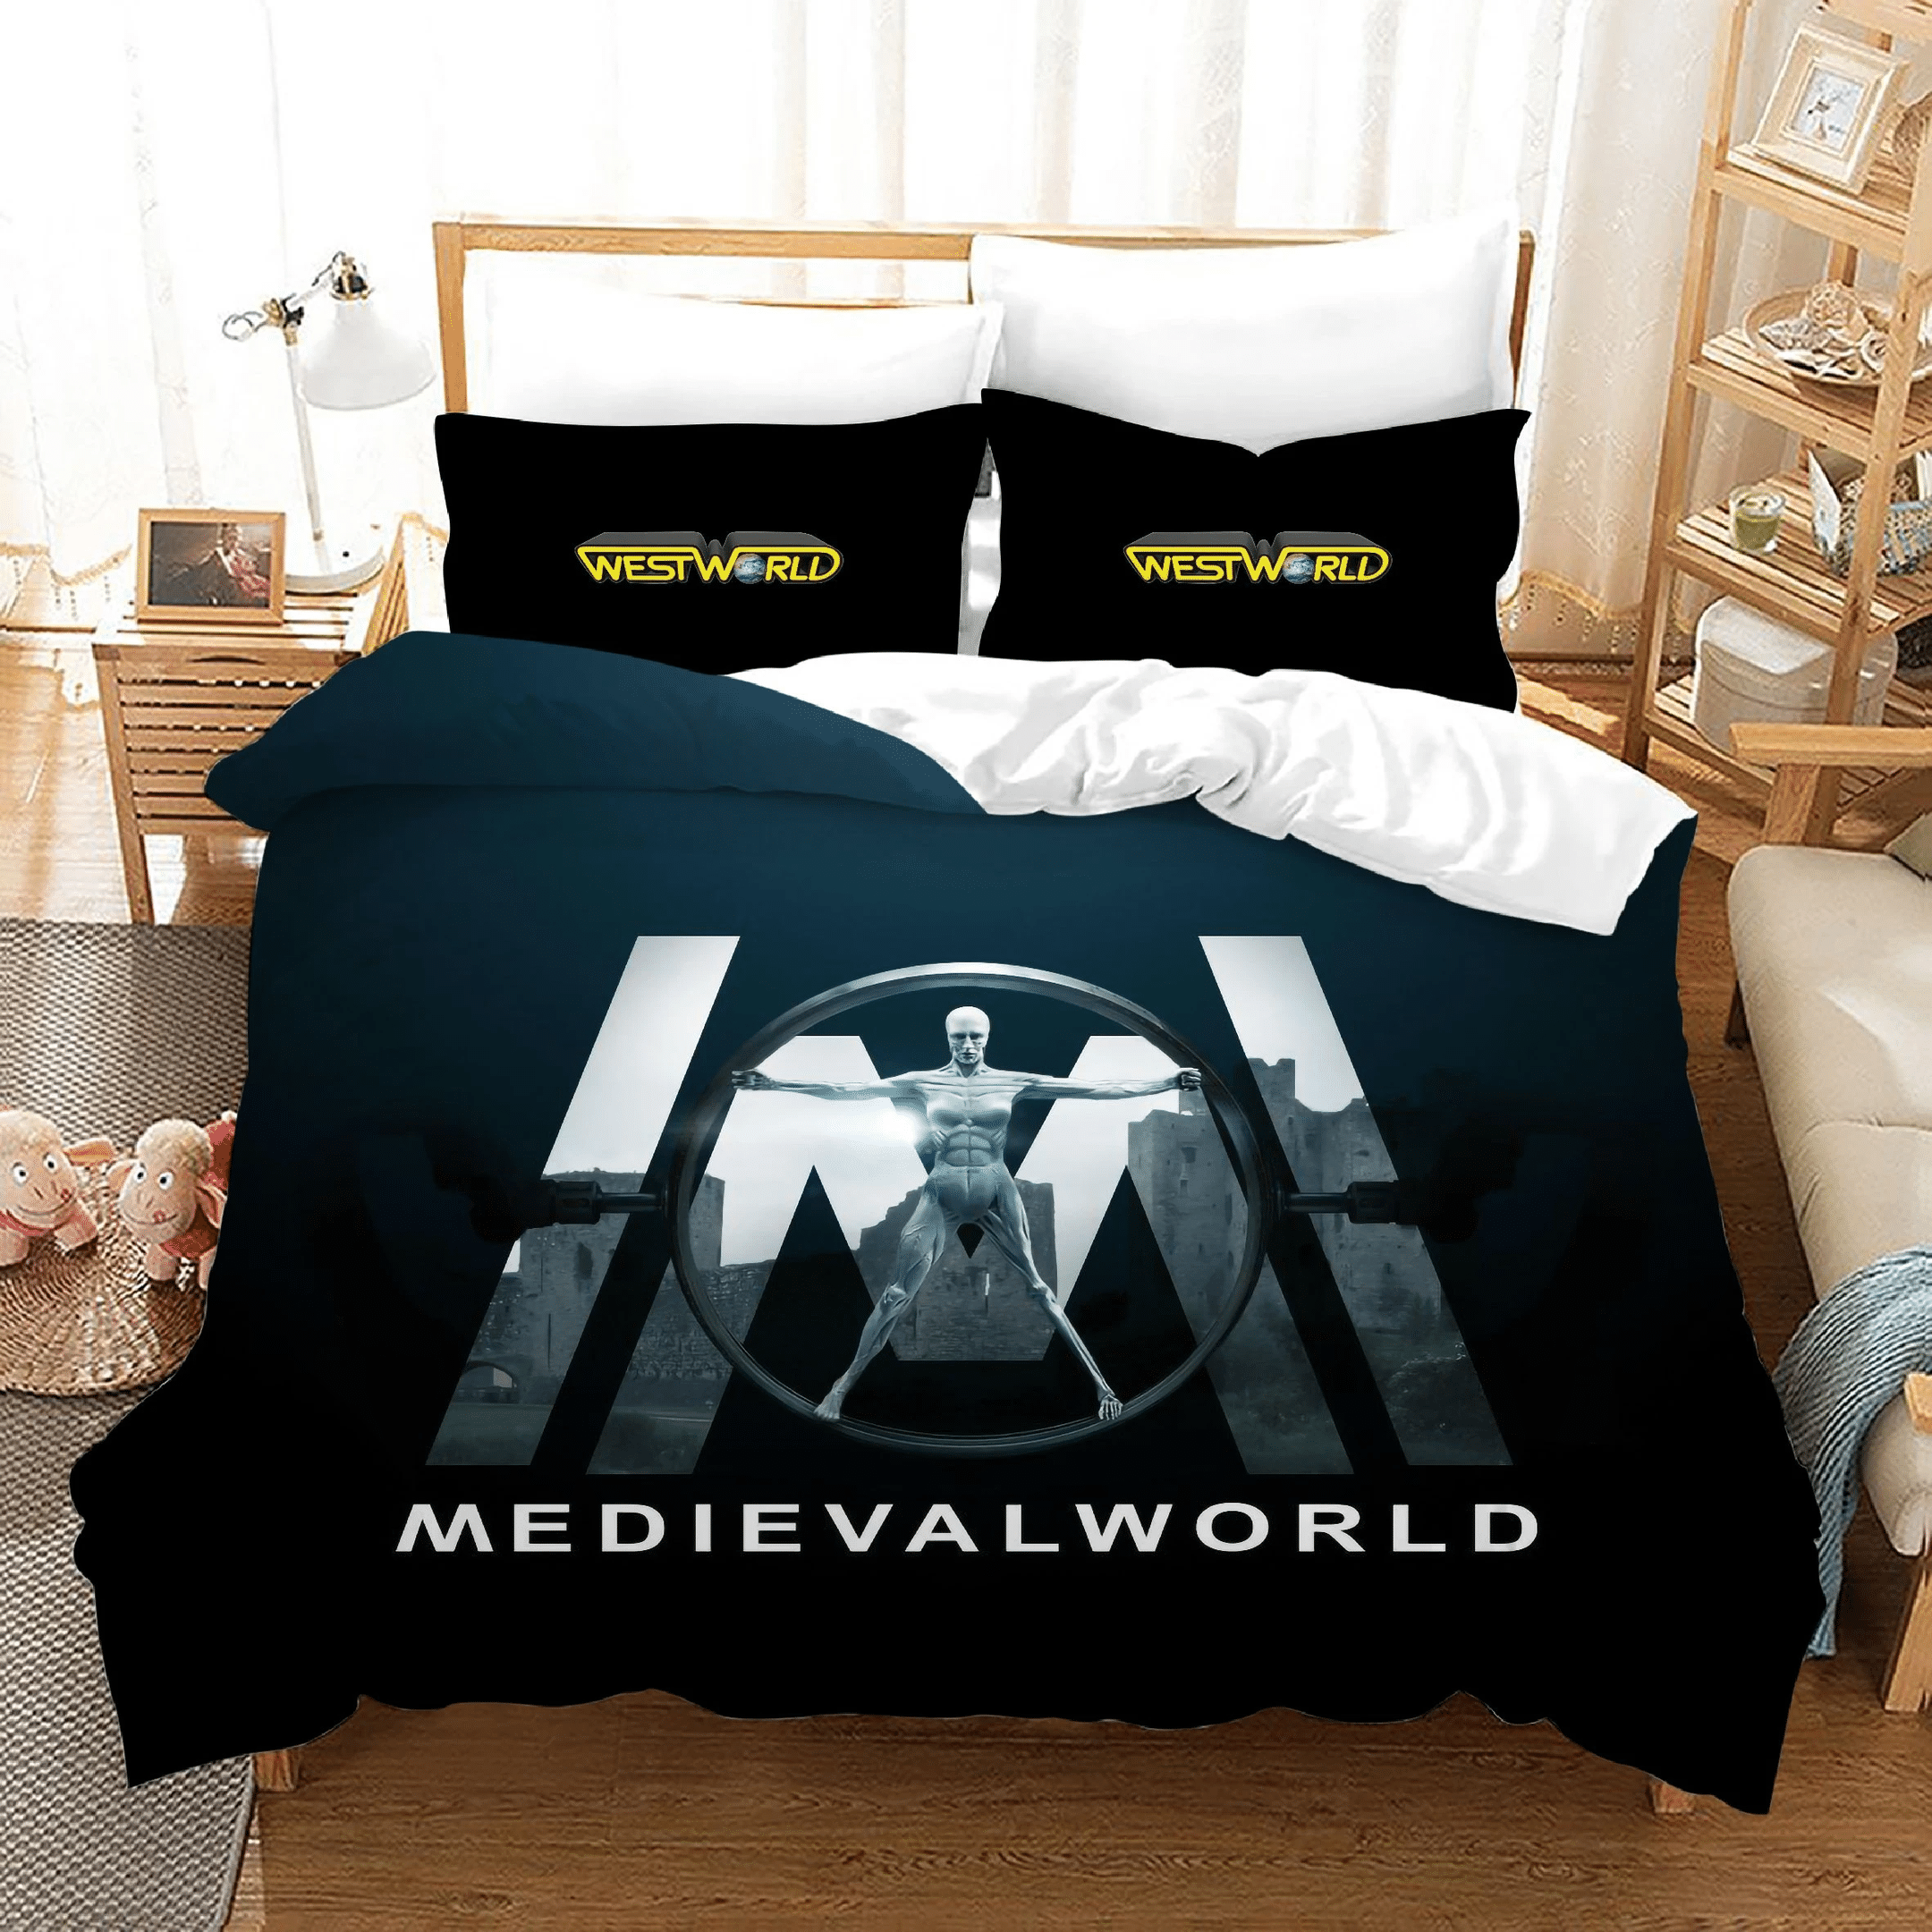 Westworld 6 Duvet Cover Pillowcase Bedding Sets Home Bedroom Decor